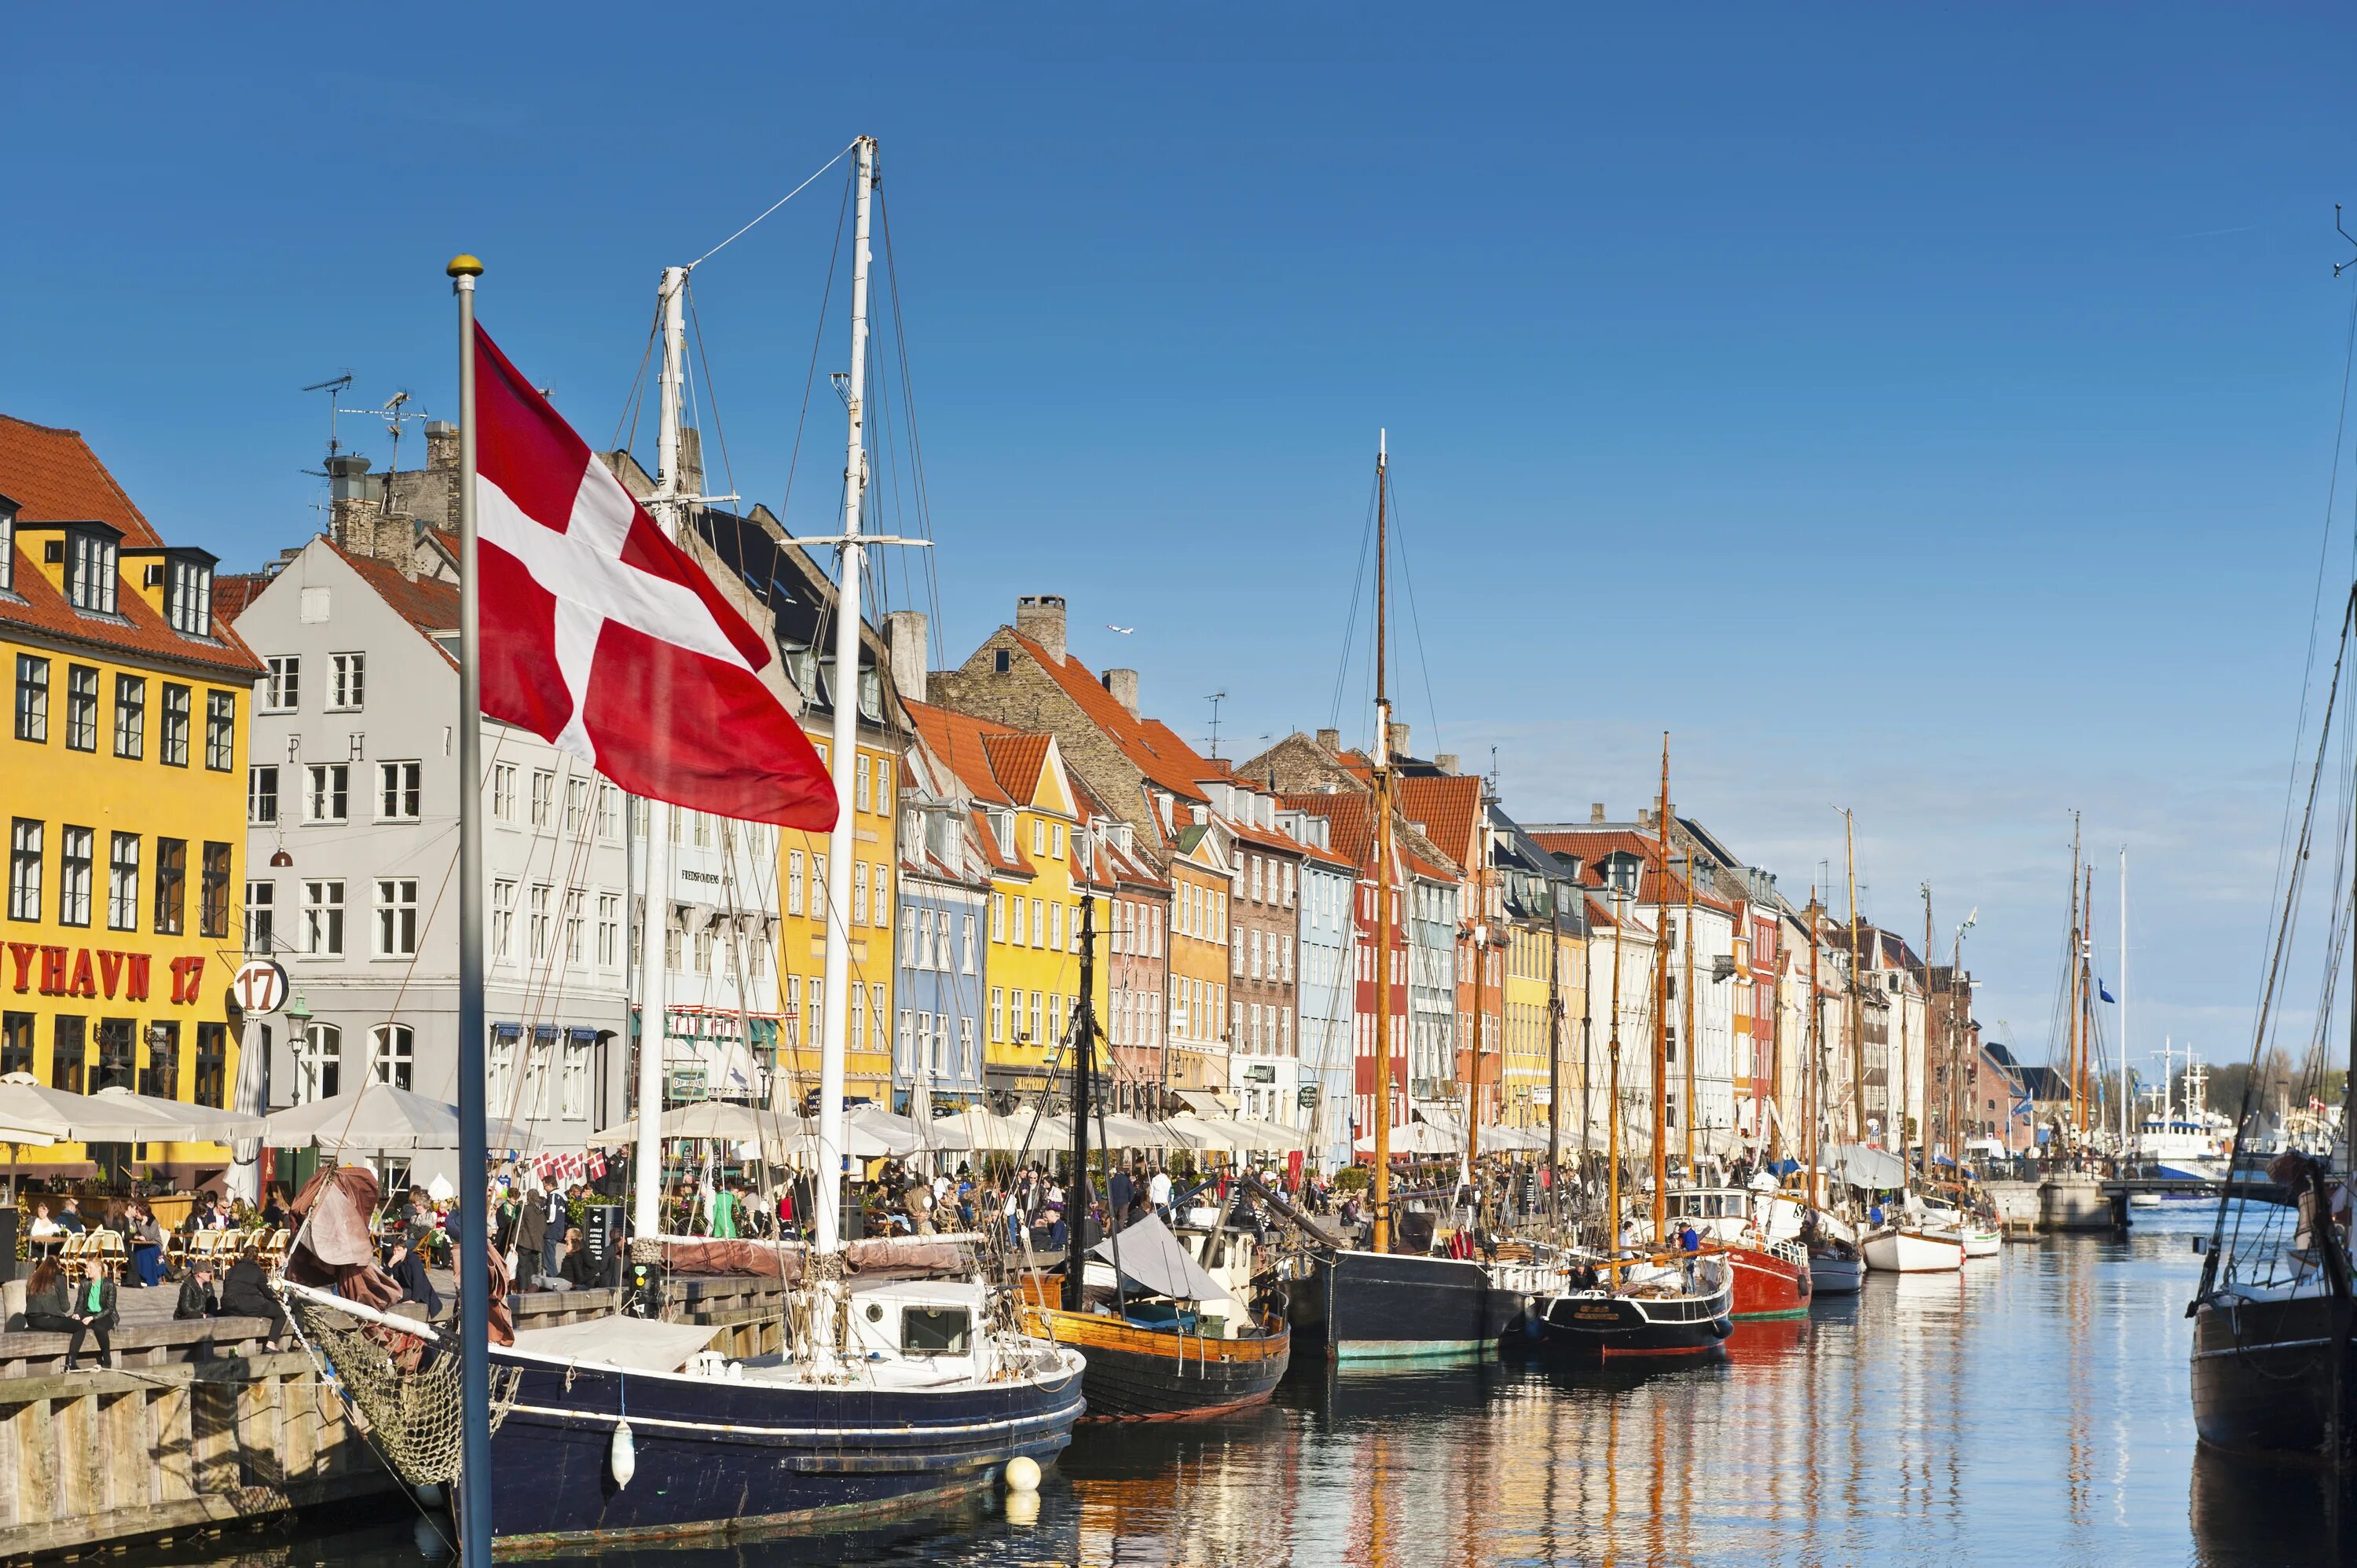 Время в копенгагене сейчас. Копенгаген столица Дании. Швеция Копенгаген.